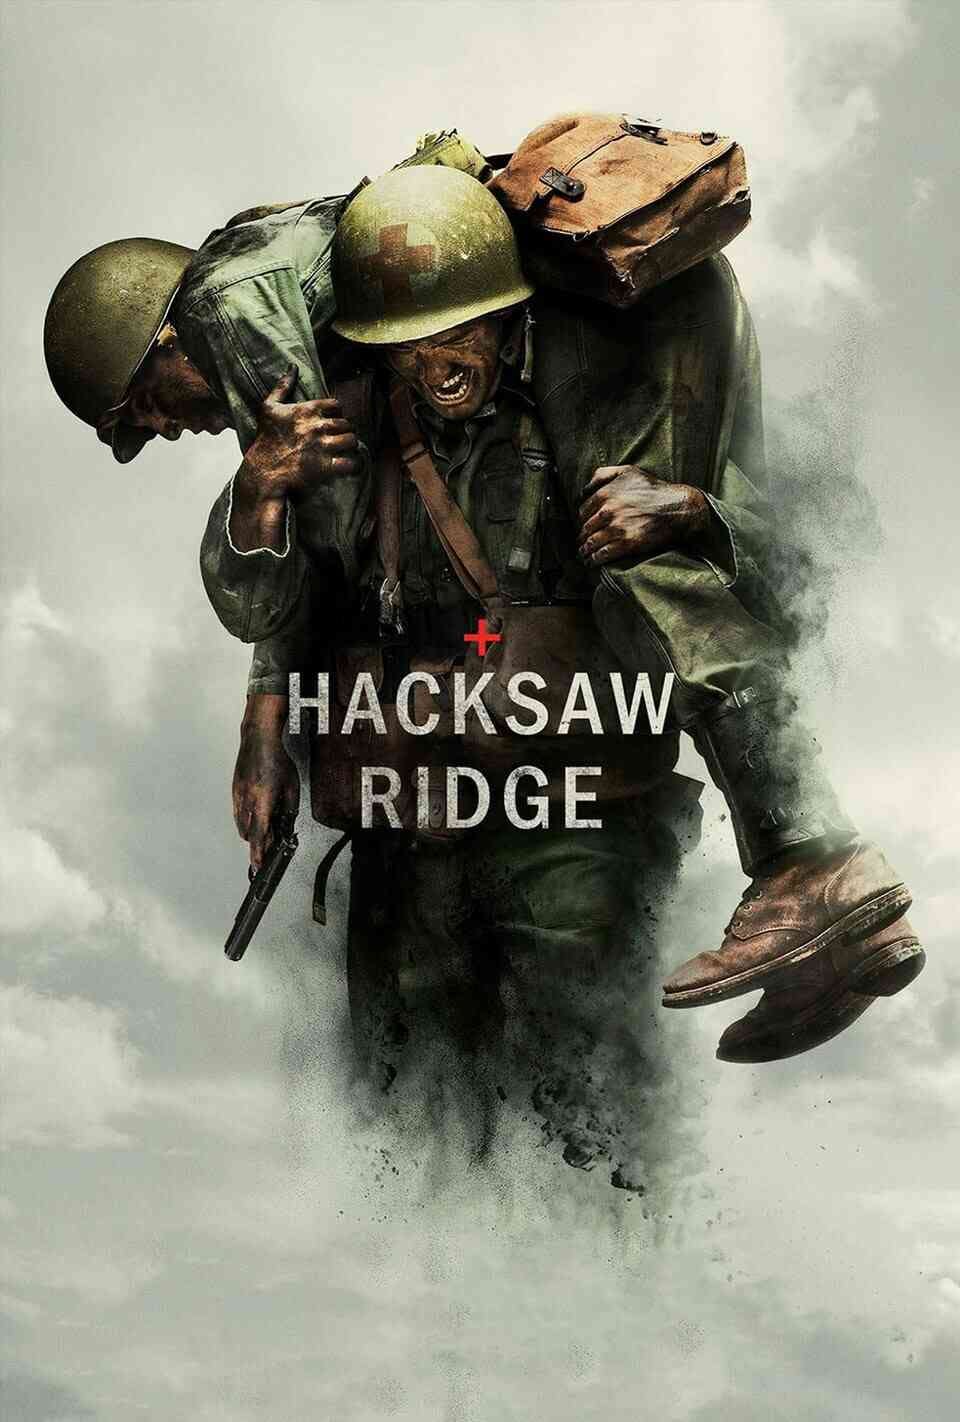 Read Hacksaw Ridge screenplay.